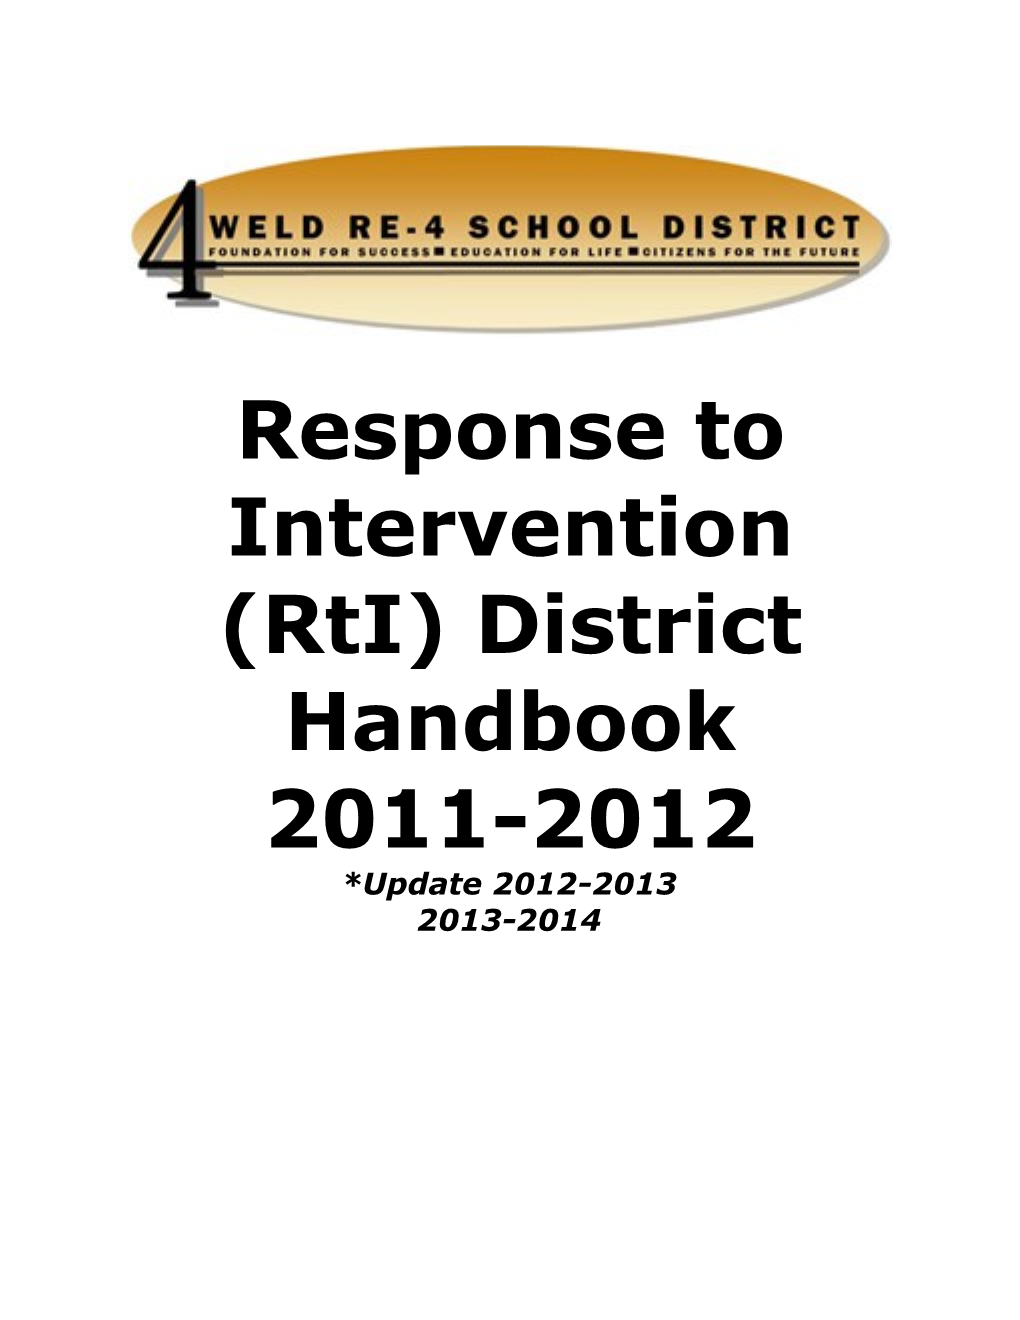 Response to Intervention (Rti) District Handbook